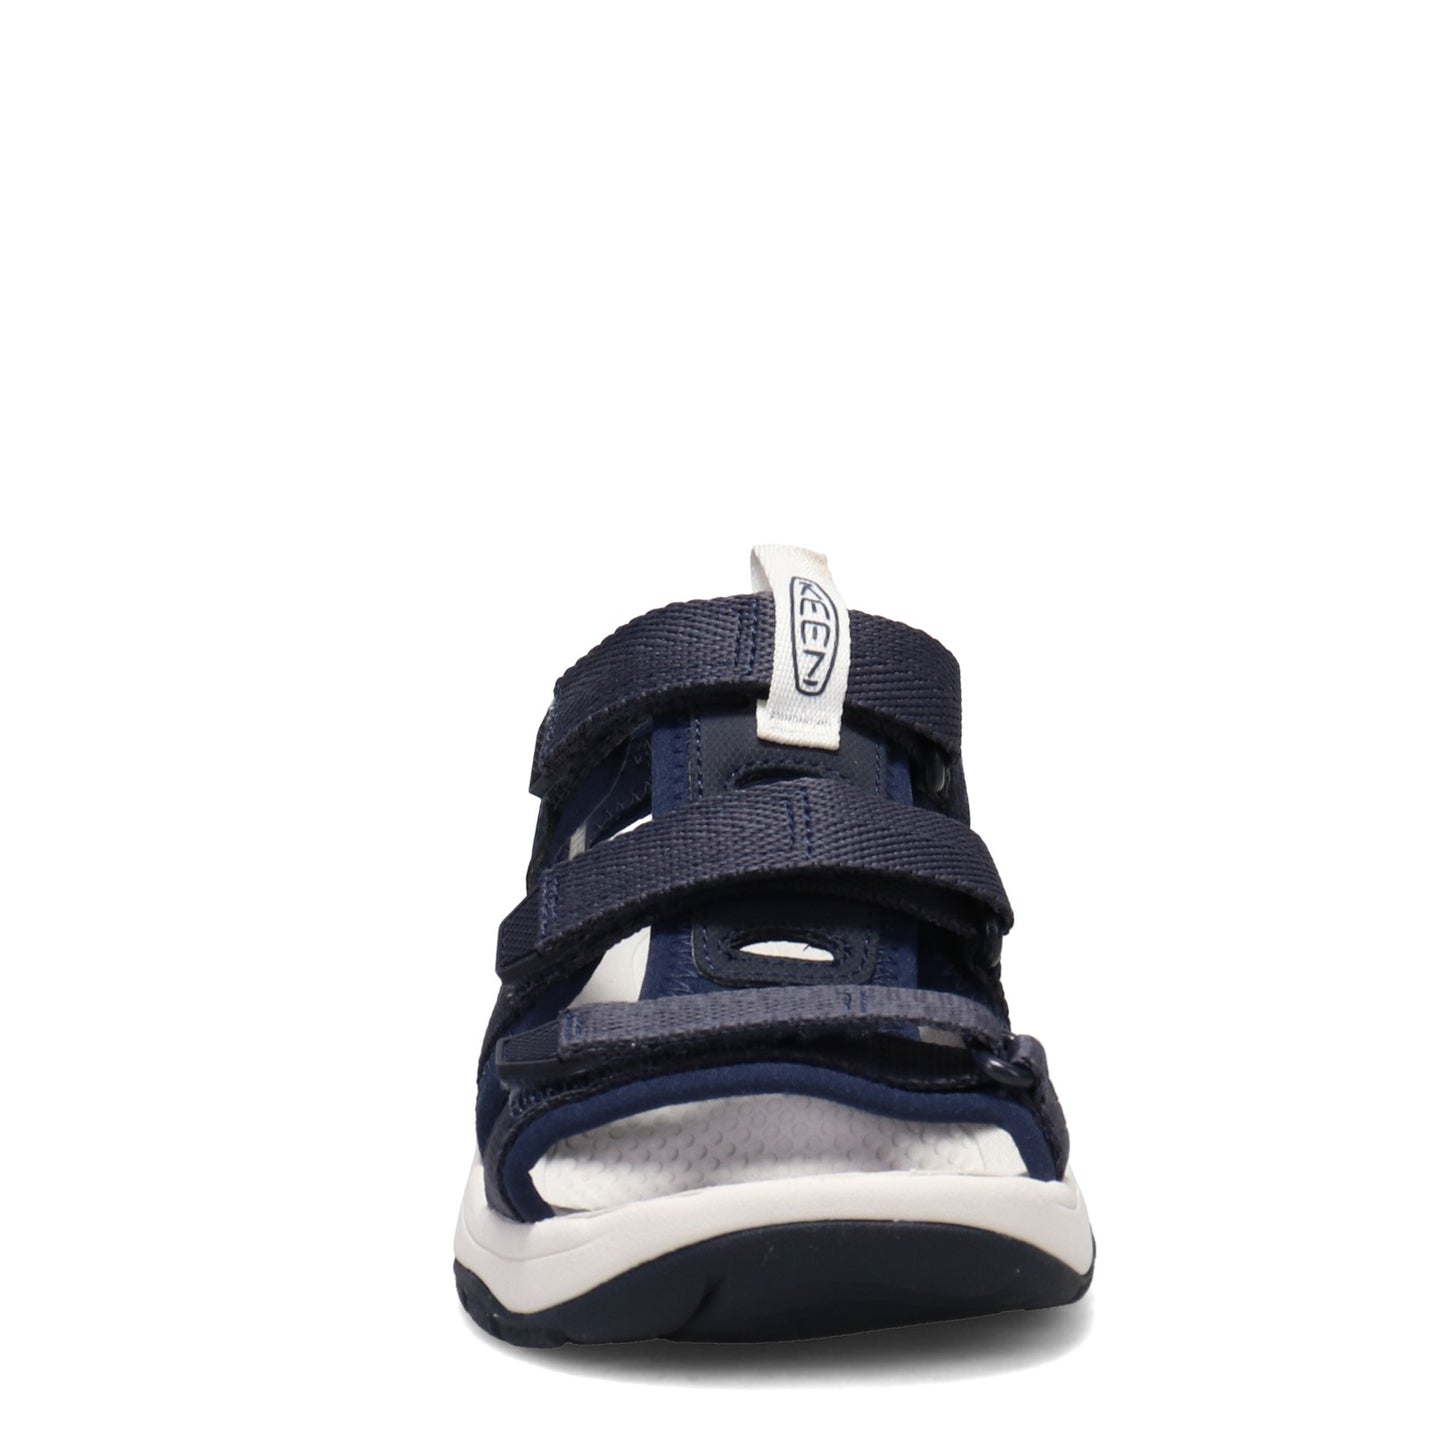 Peltz Shoes  Women's Keen Astoria West Open Toe Sandal Blue/Black 1024871